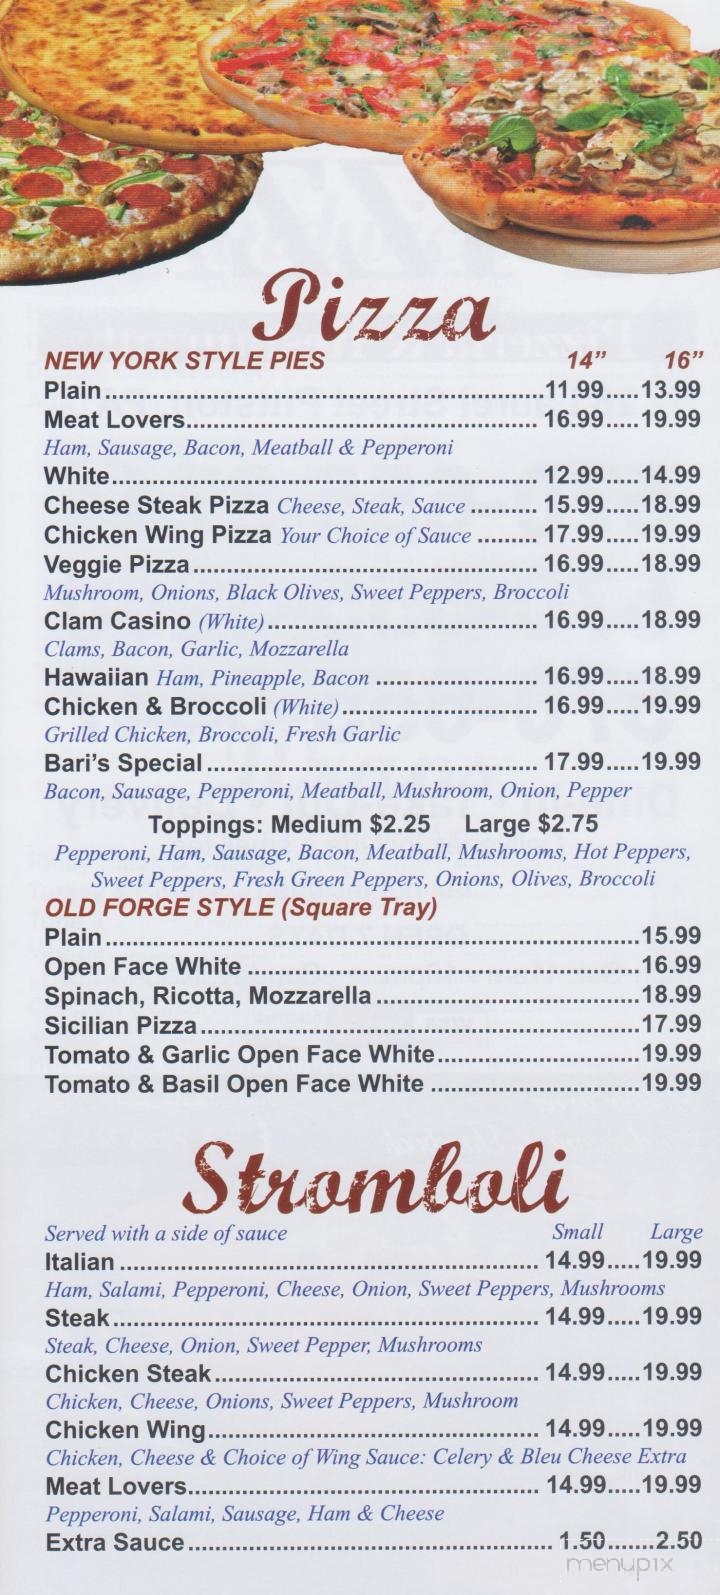 Bari Pizza - Pittston, PA